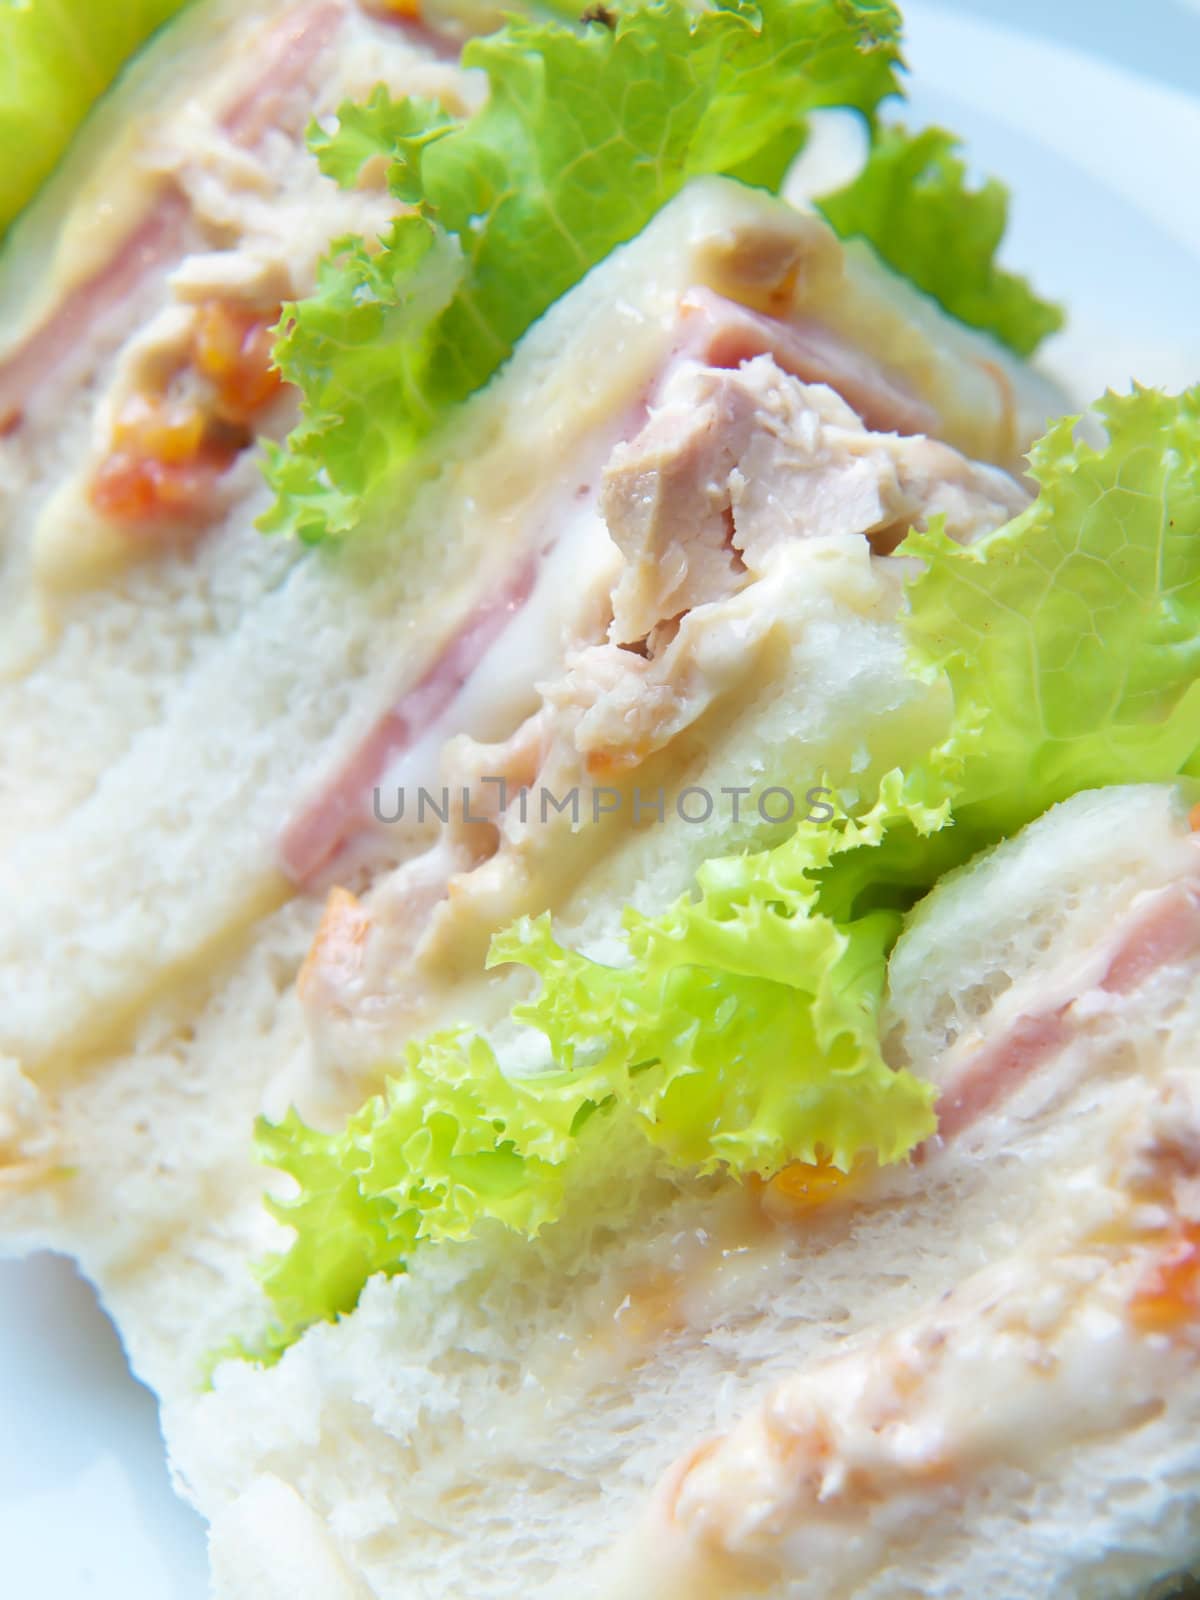 Sandwich by Exsodus